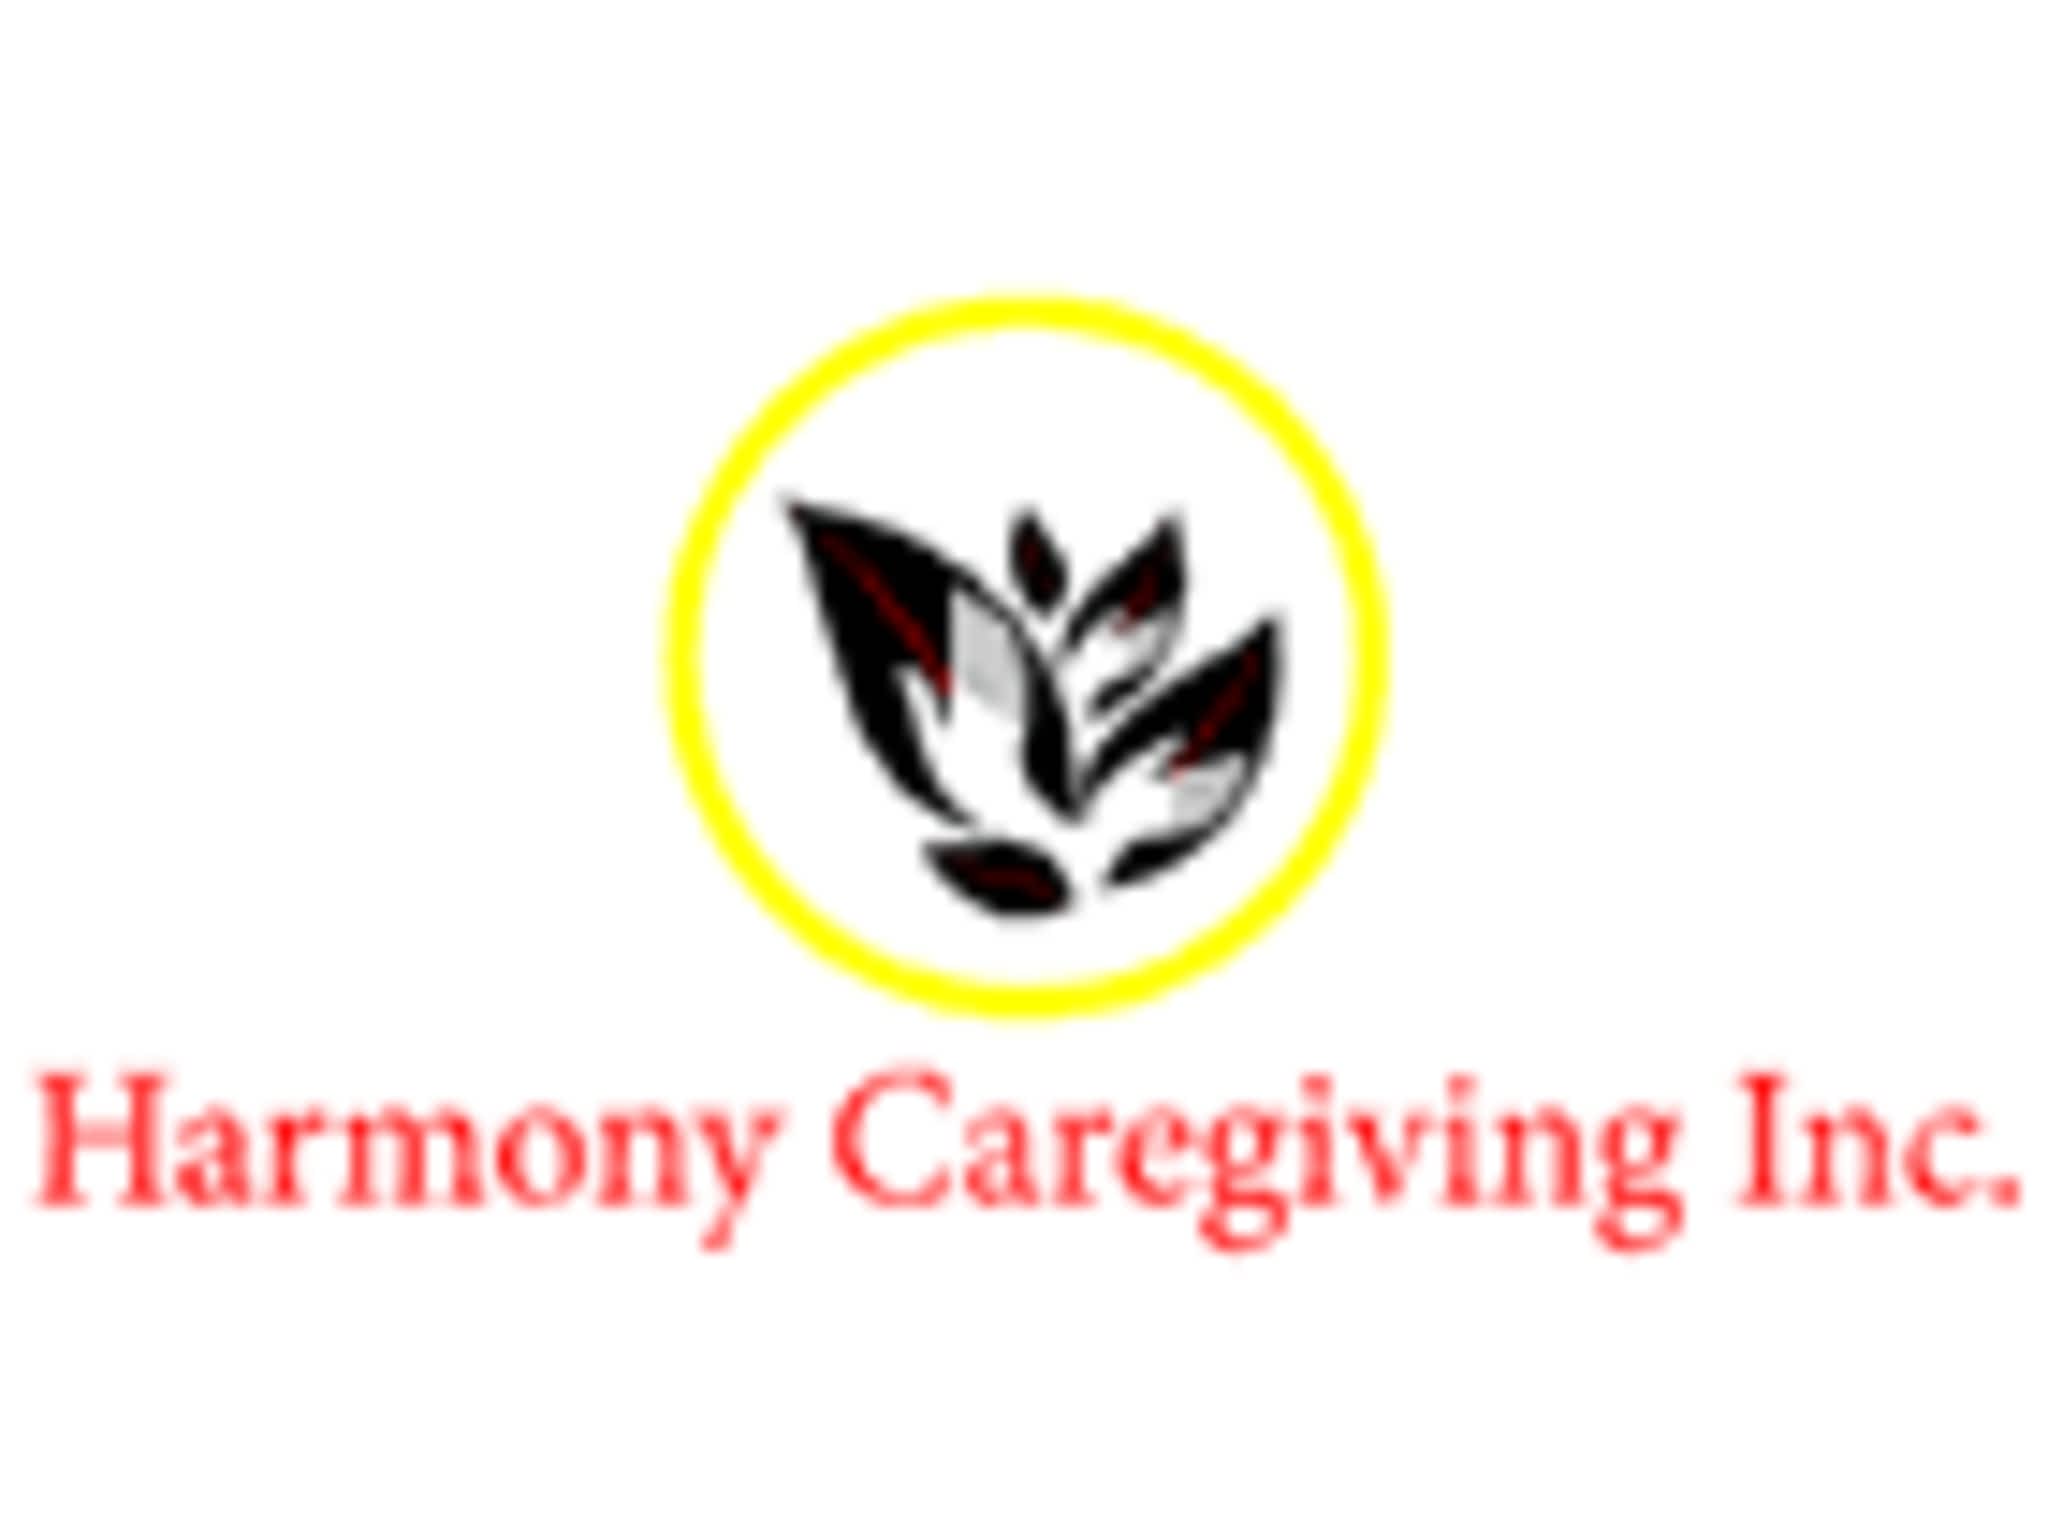 photo Harmony Caregiving